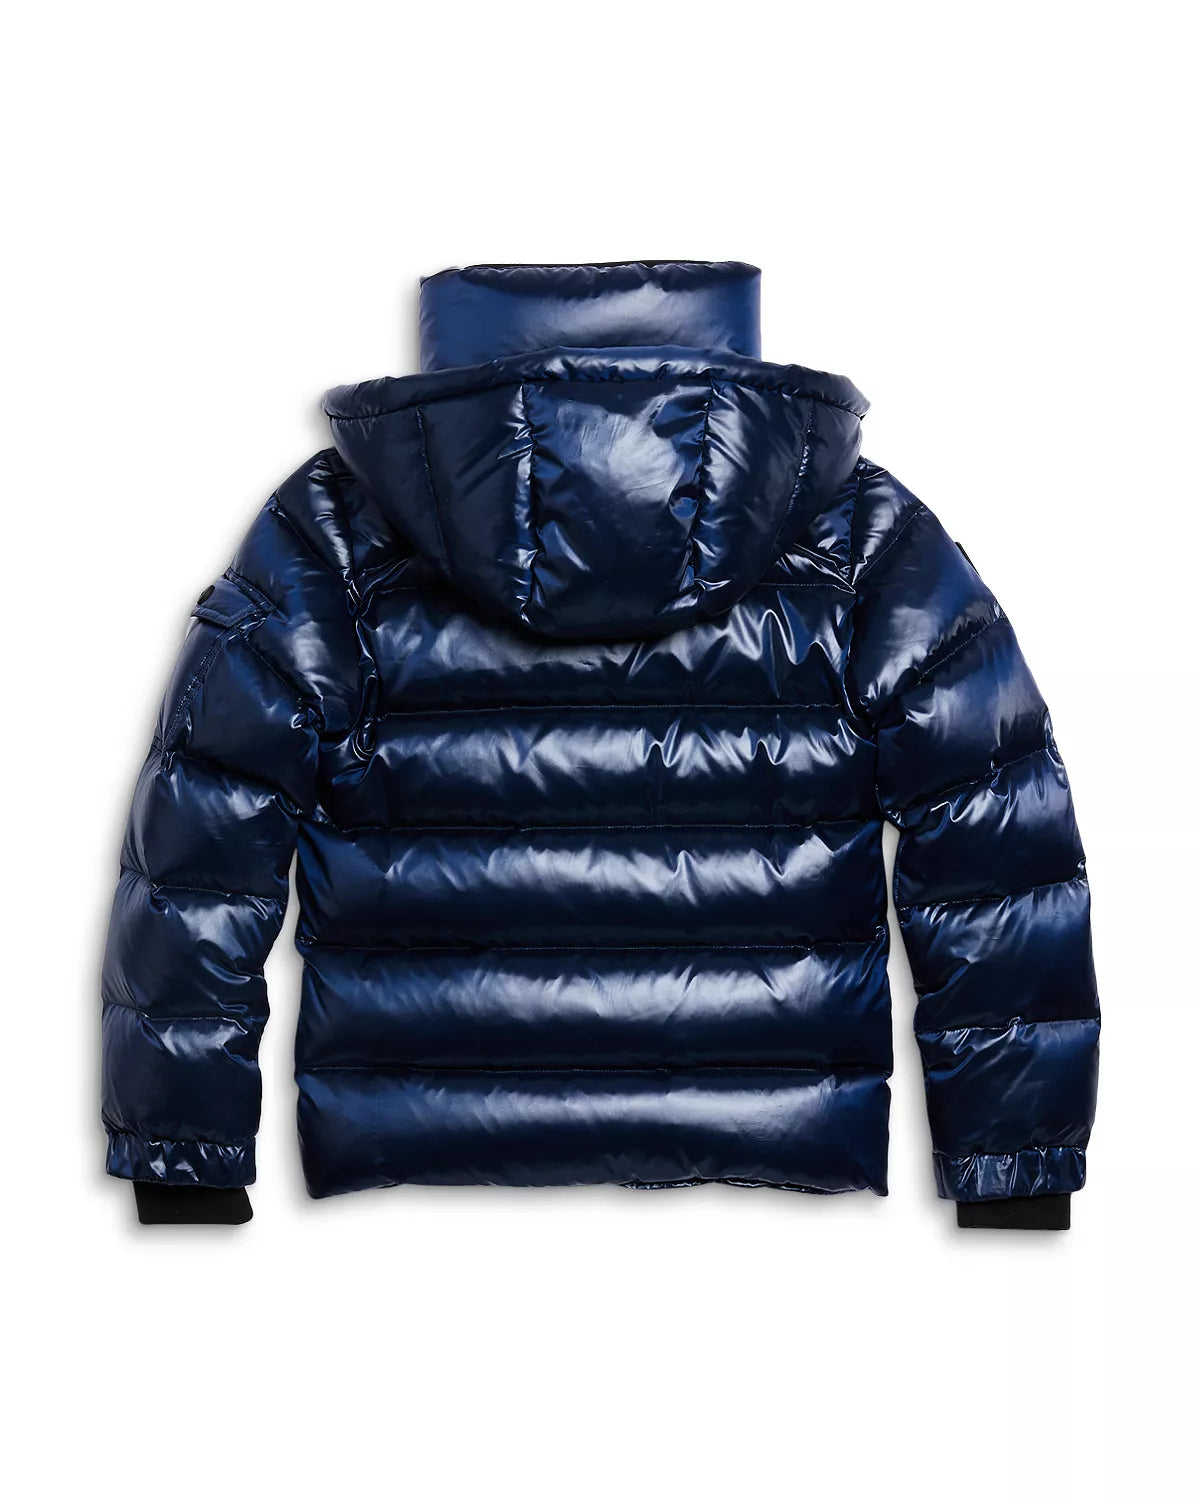 SAM. Outerwear Glacier Jacket